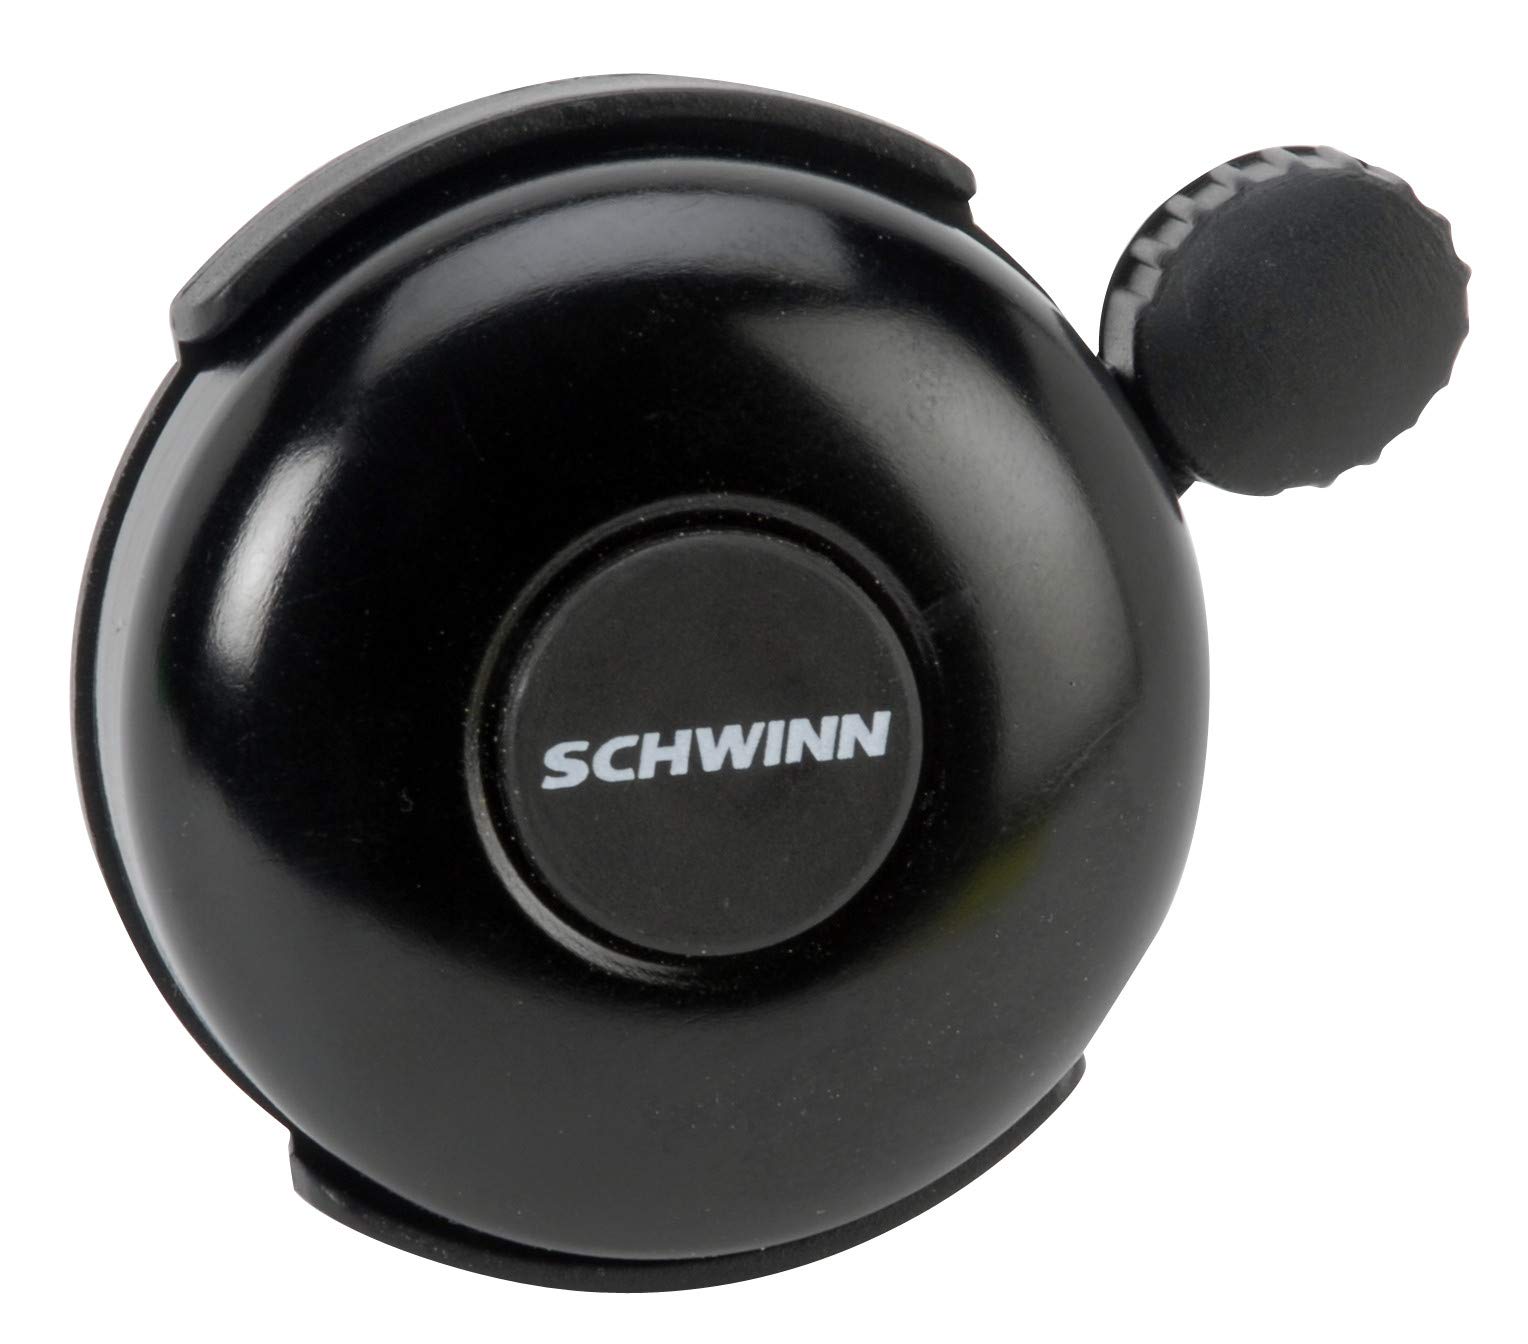 Schwinn Classic Bike Bell Loud Ringing Sound (Black) $3.19 + Free Shipping w/ Prime or on $35+